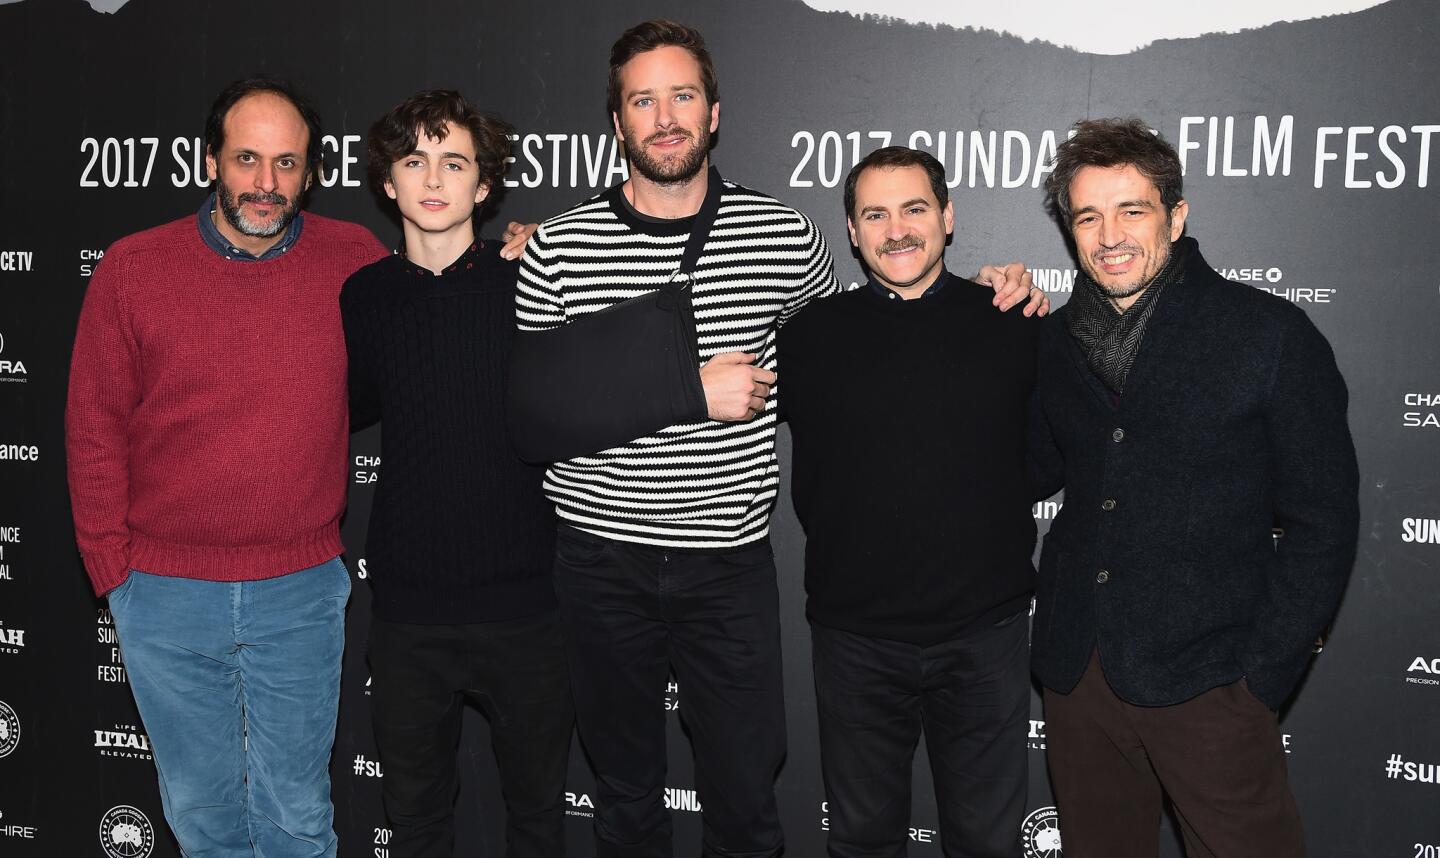 Photos: The scene at Sundance Film Festival 2017 - Los Angeles Times